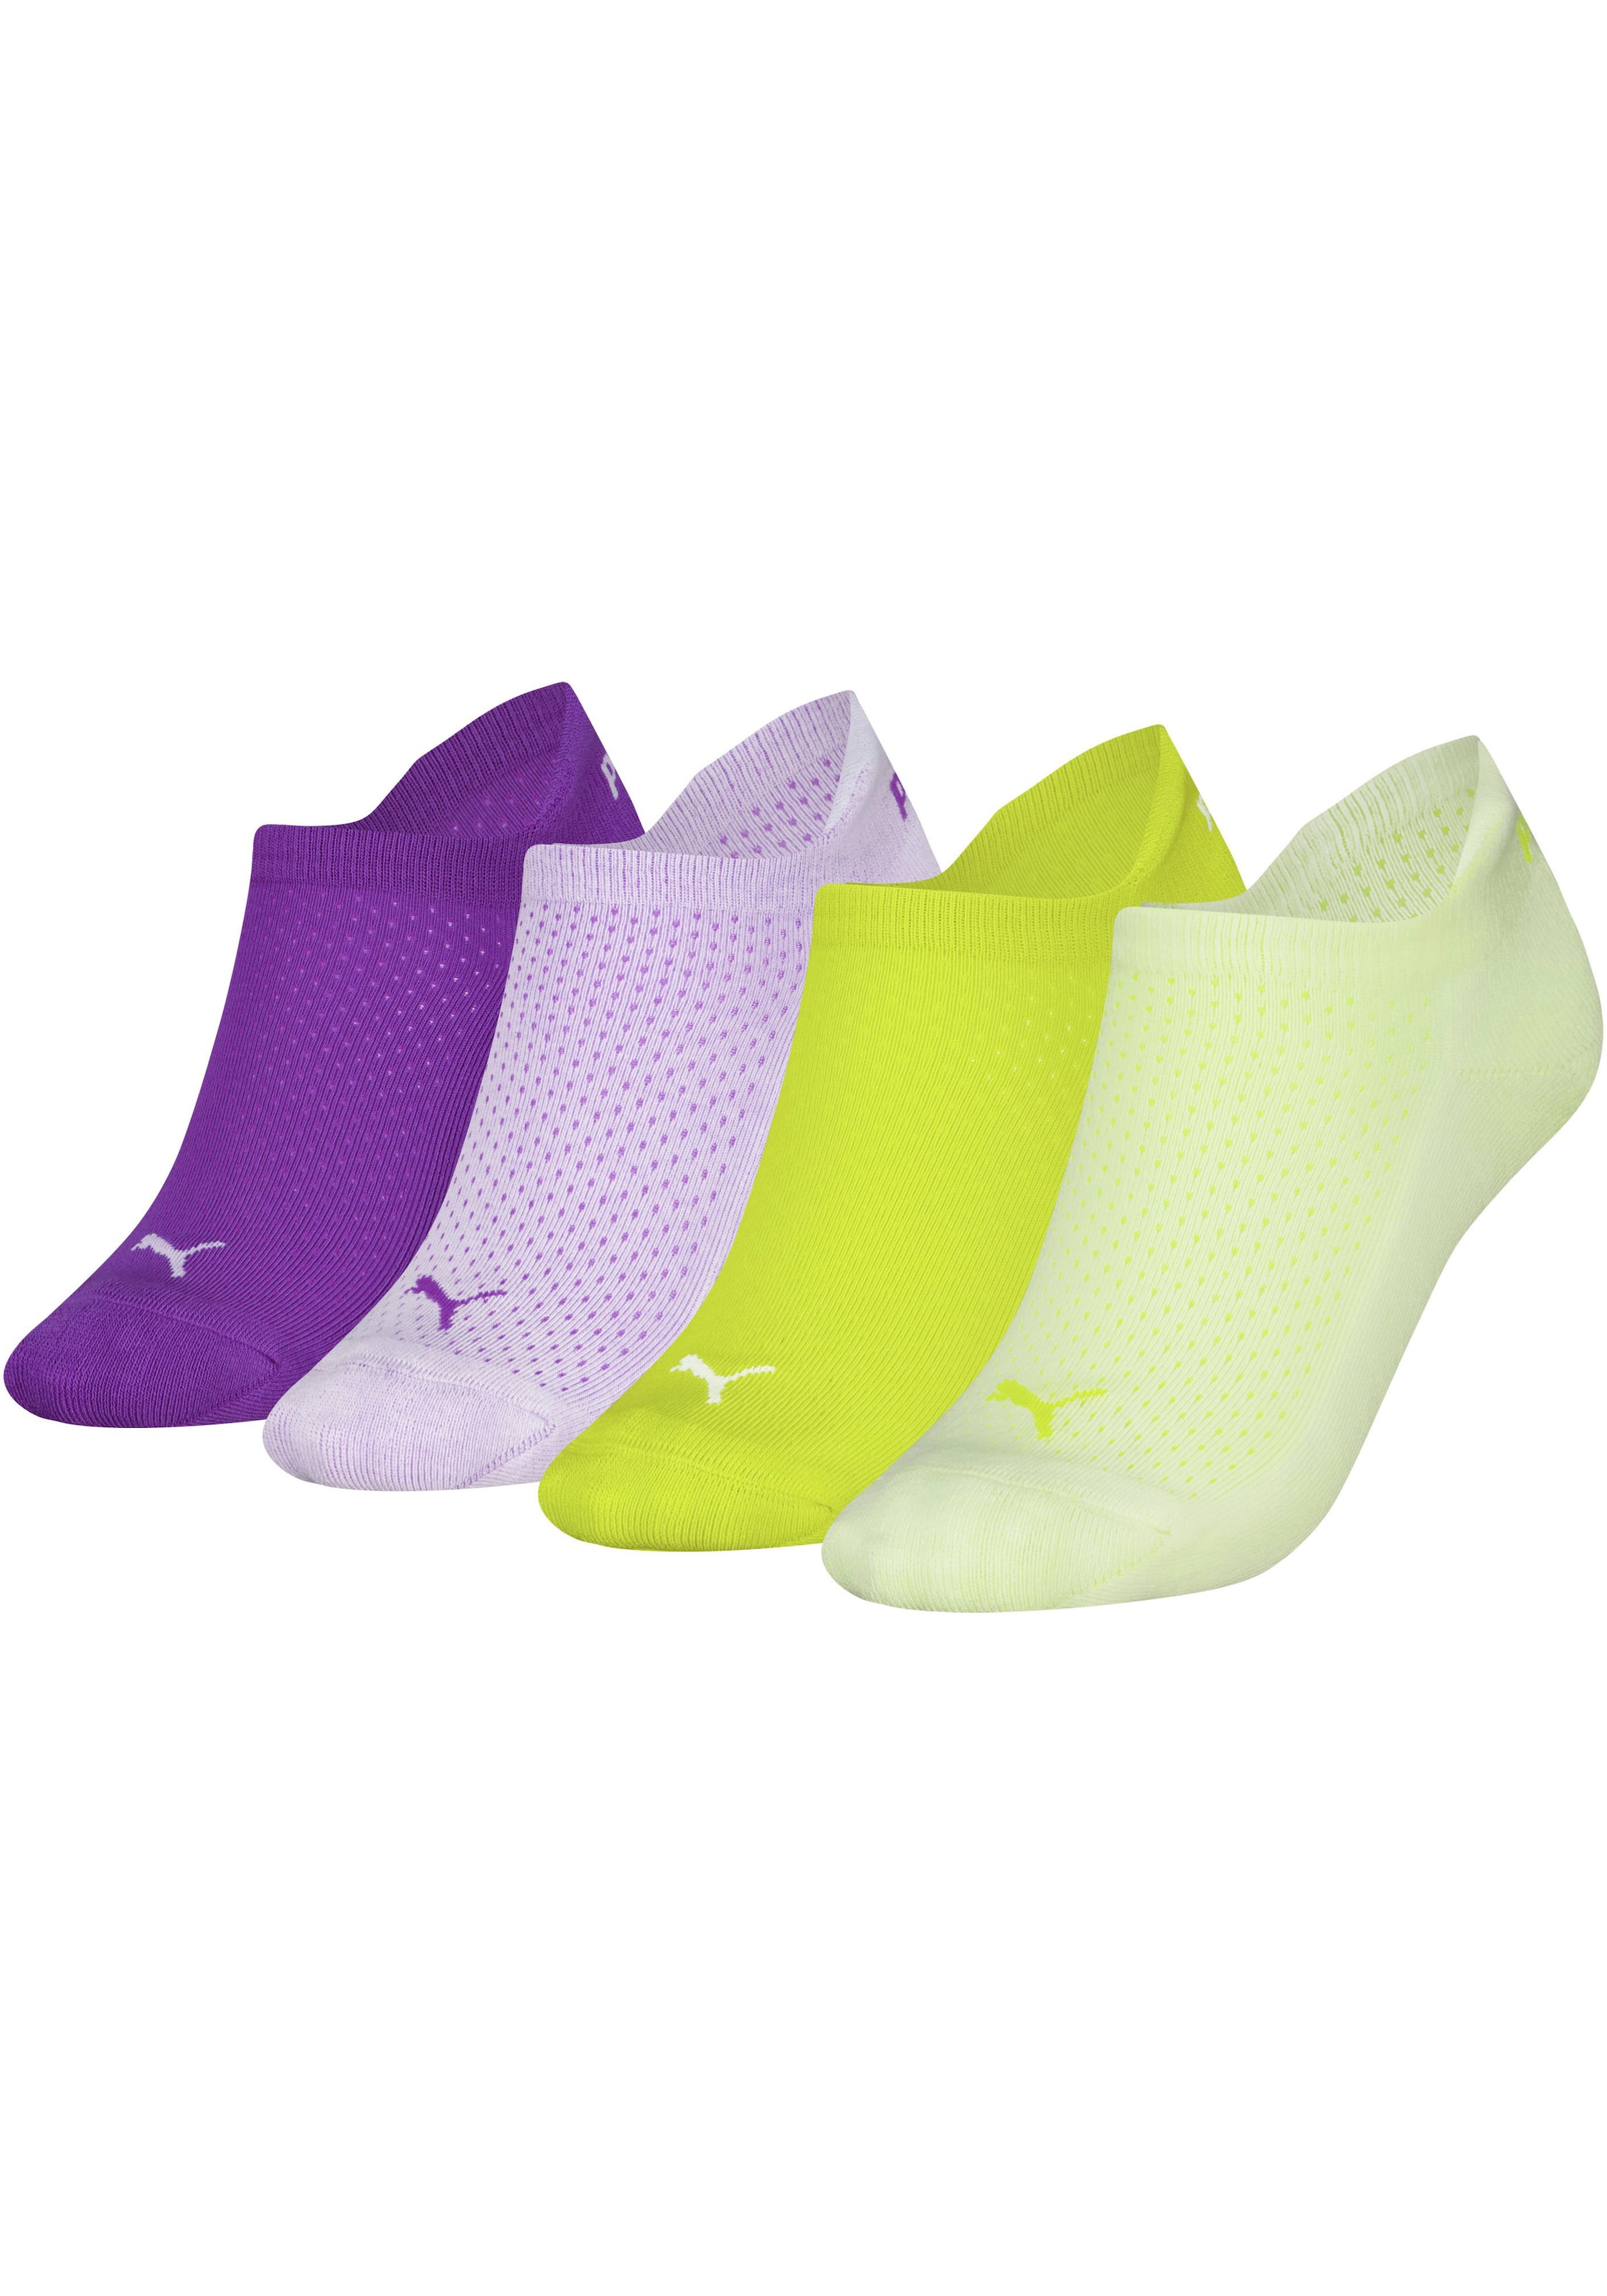 Sneakersocken, (4 Paar), in stylischen Sommerfarben